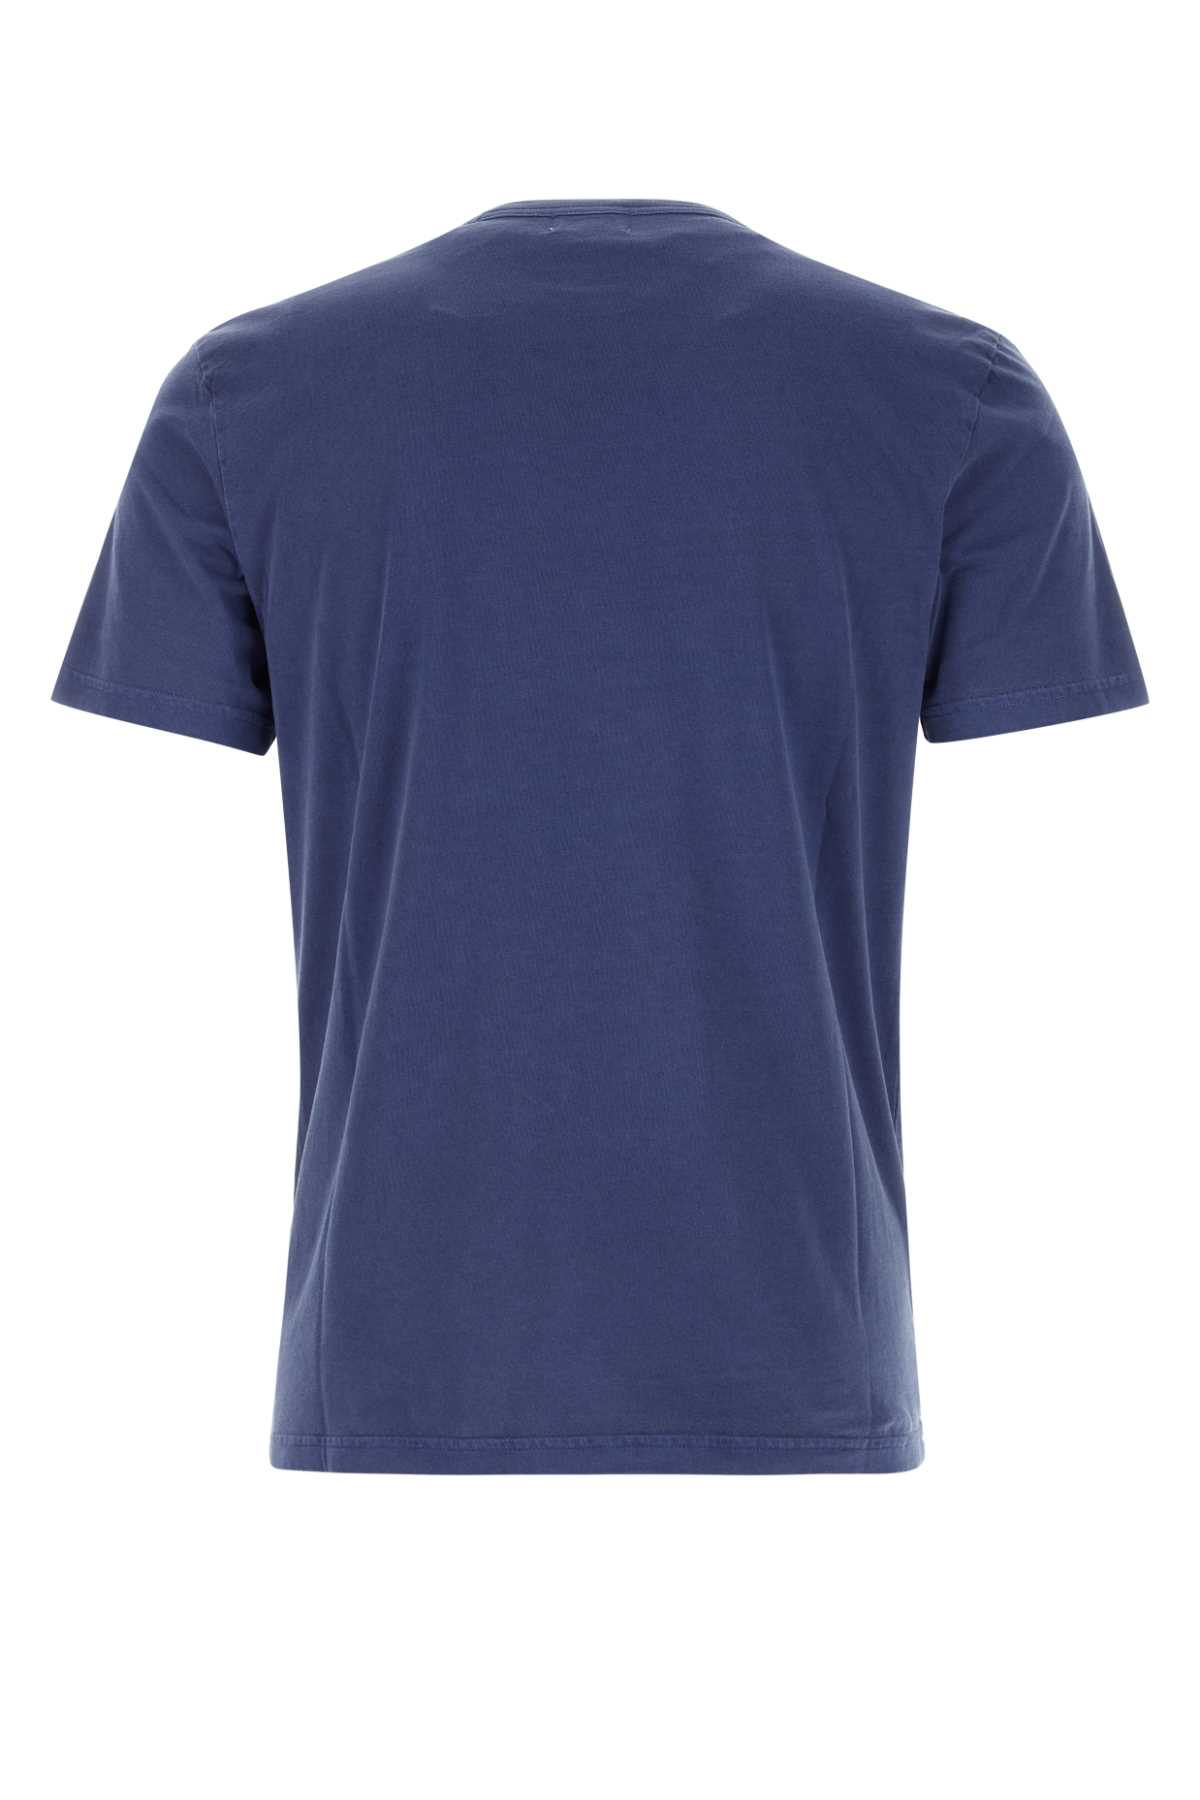 Woolrich Blue Cotton T-shirt In 31108